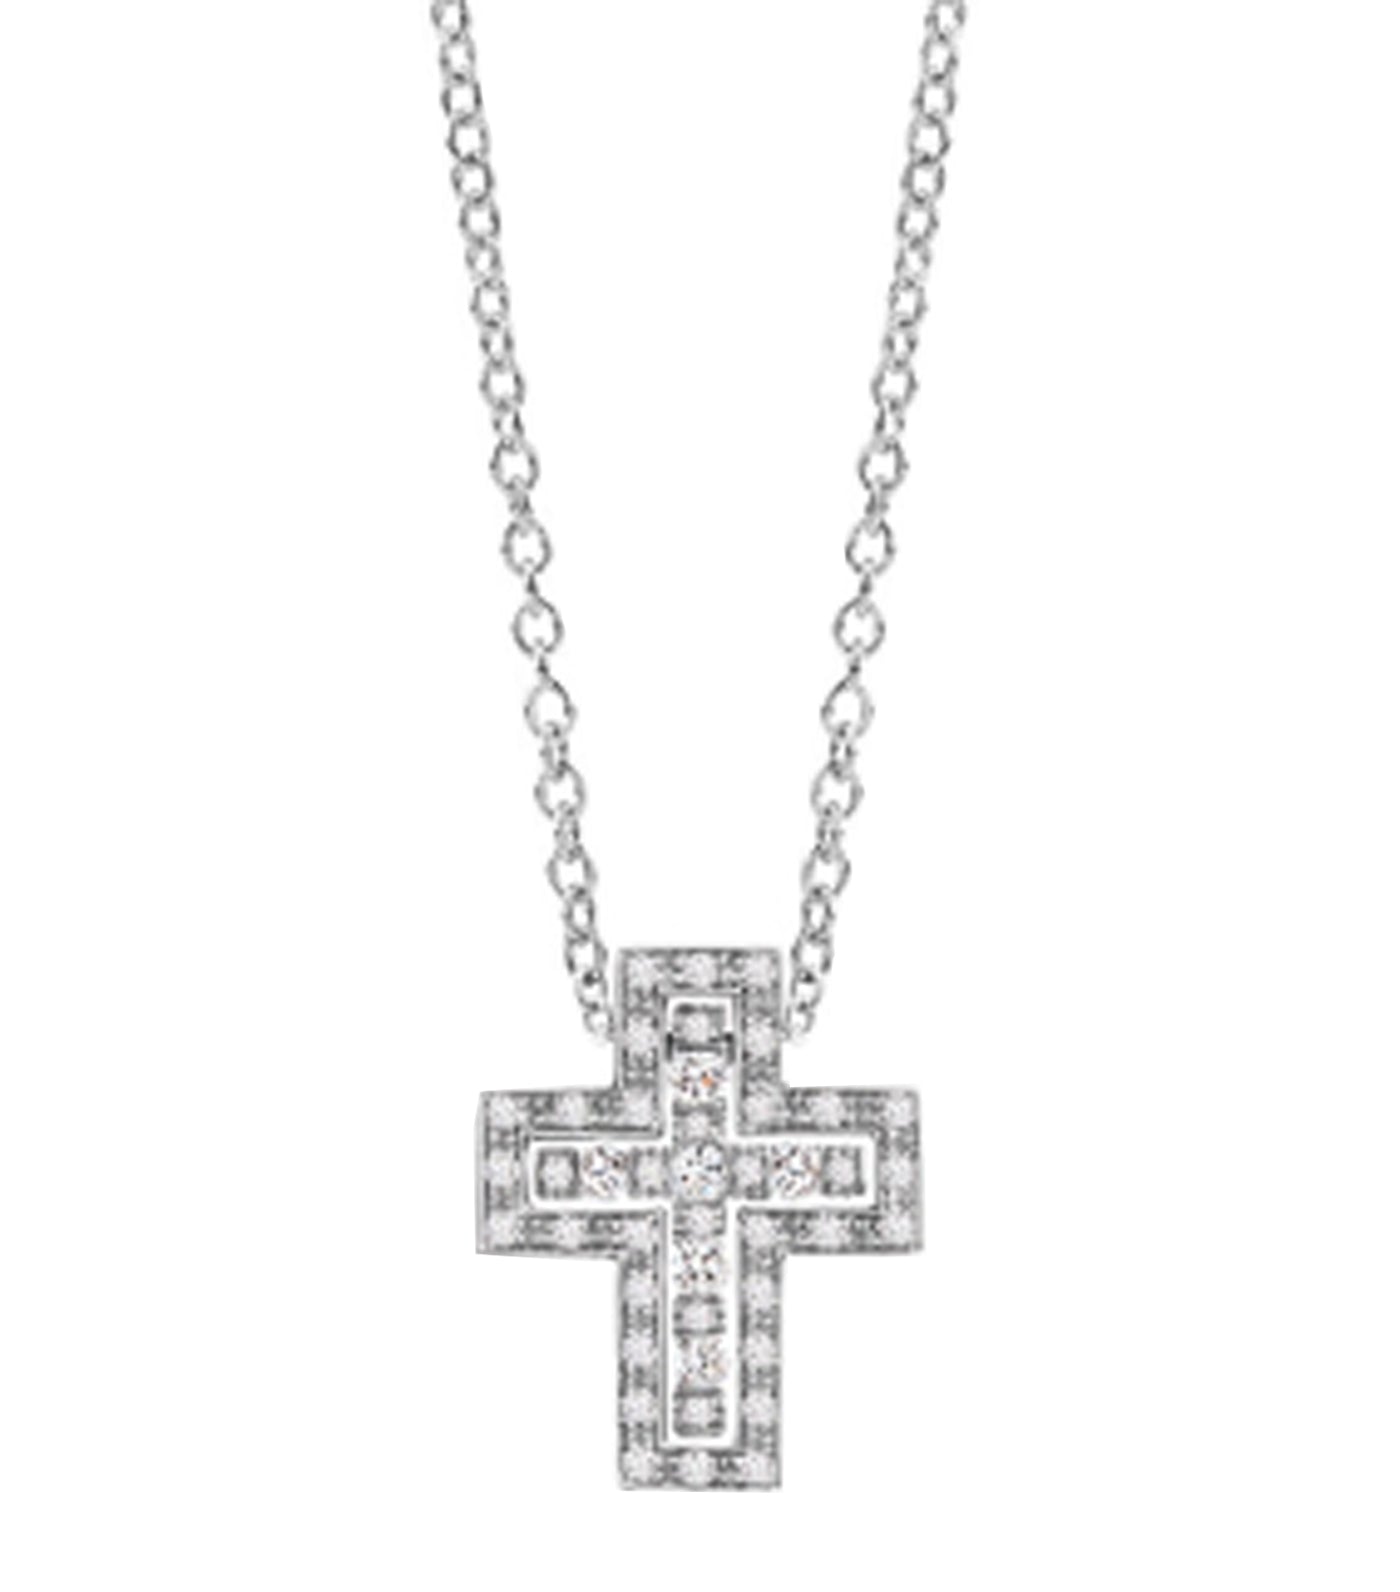 Belle Epoque 18K White Gold and Diamonds Cross Necklace 45cm